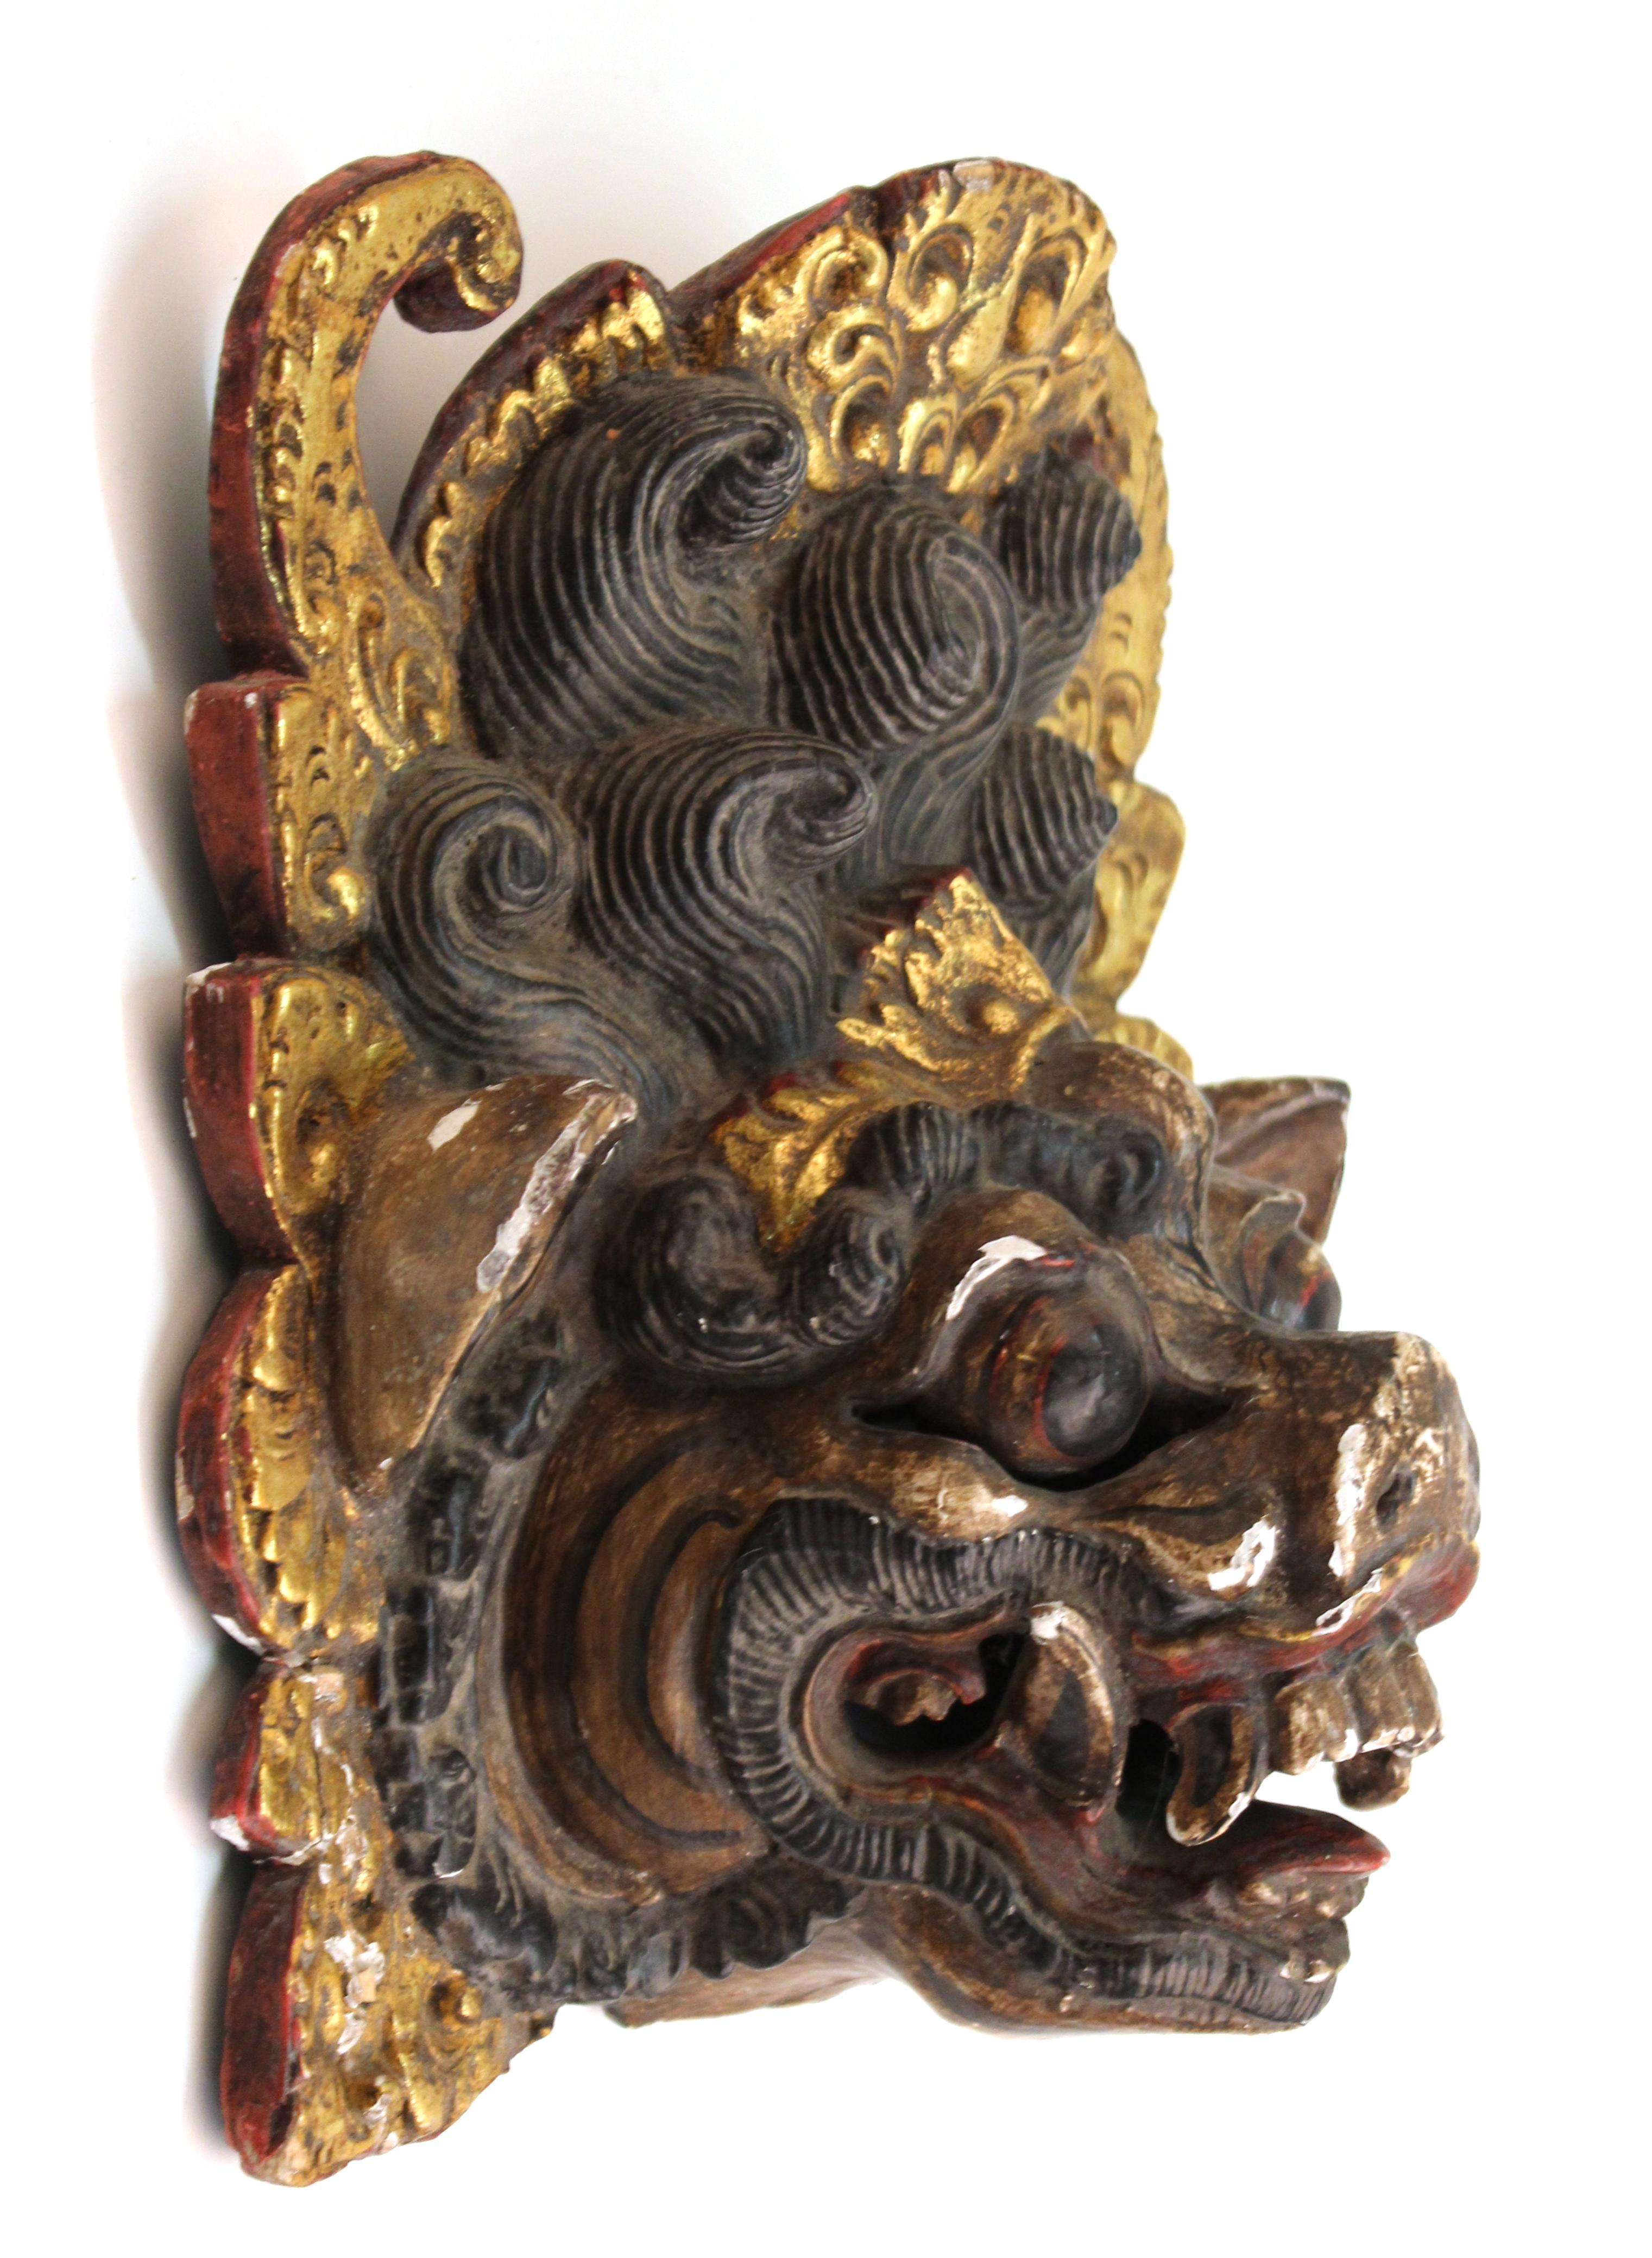 Hand-Painted Balinese Barong Wood Dance Mask of Mythological Creature